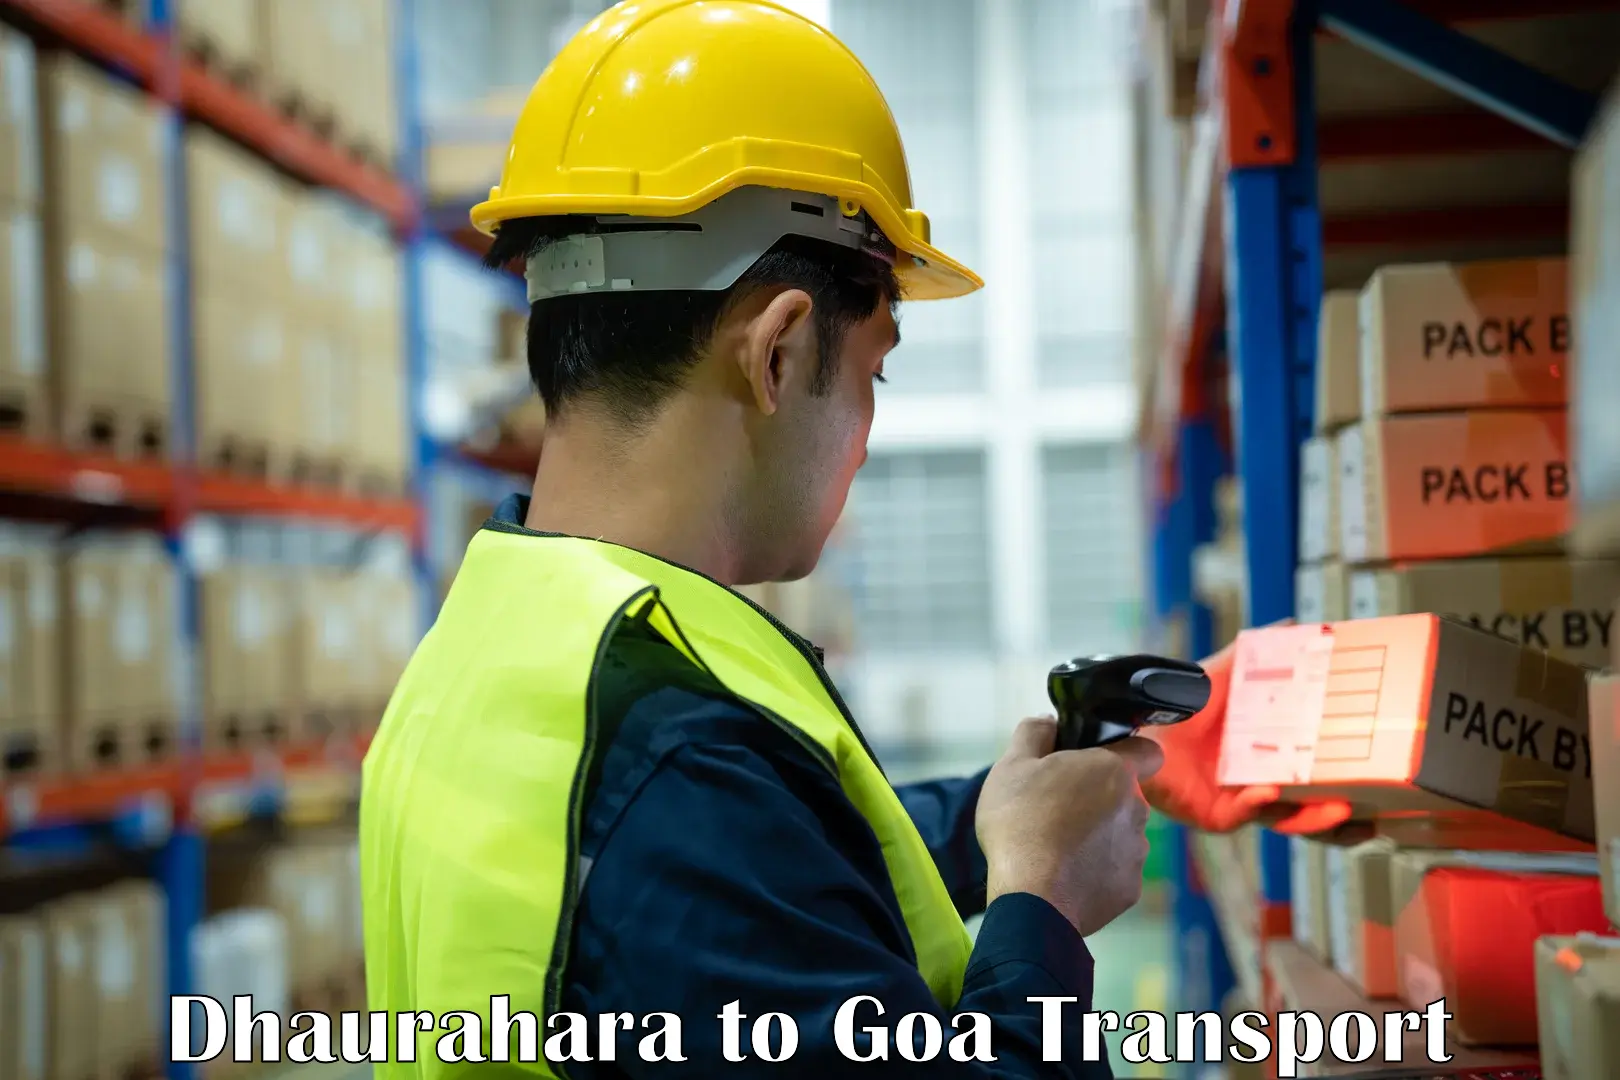 Bike transfer Dhaurahara to Goa